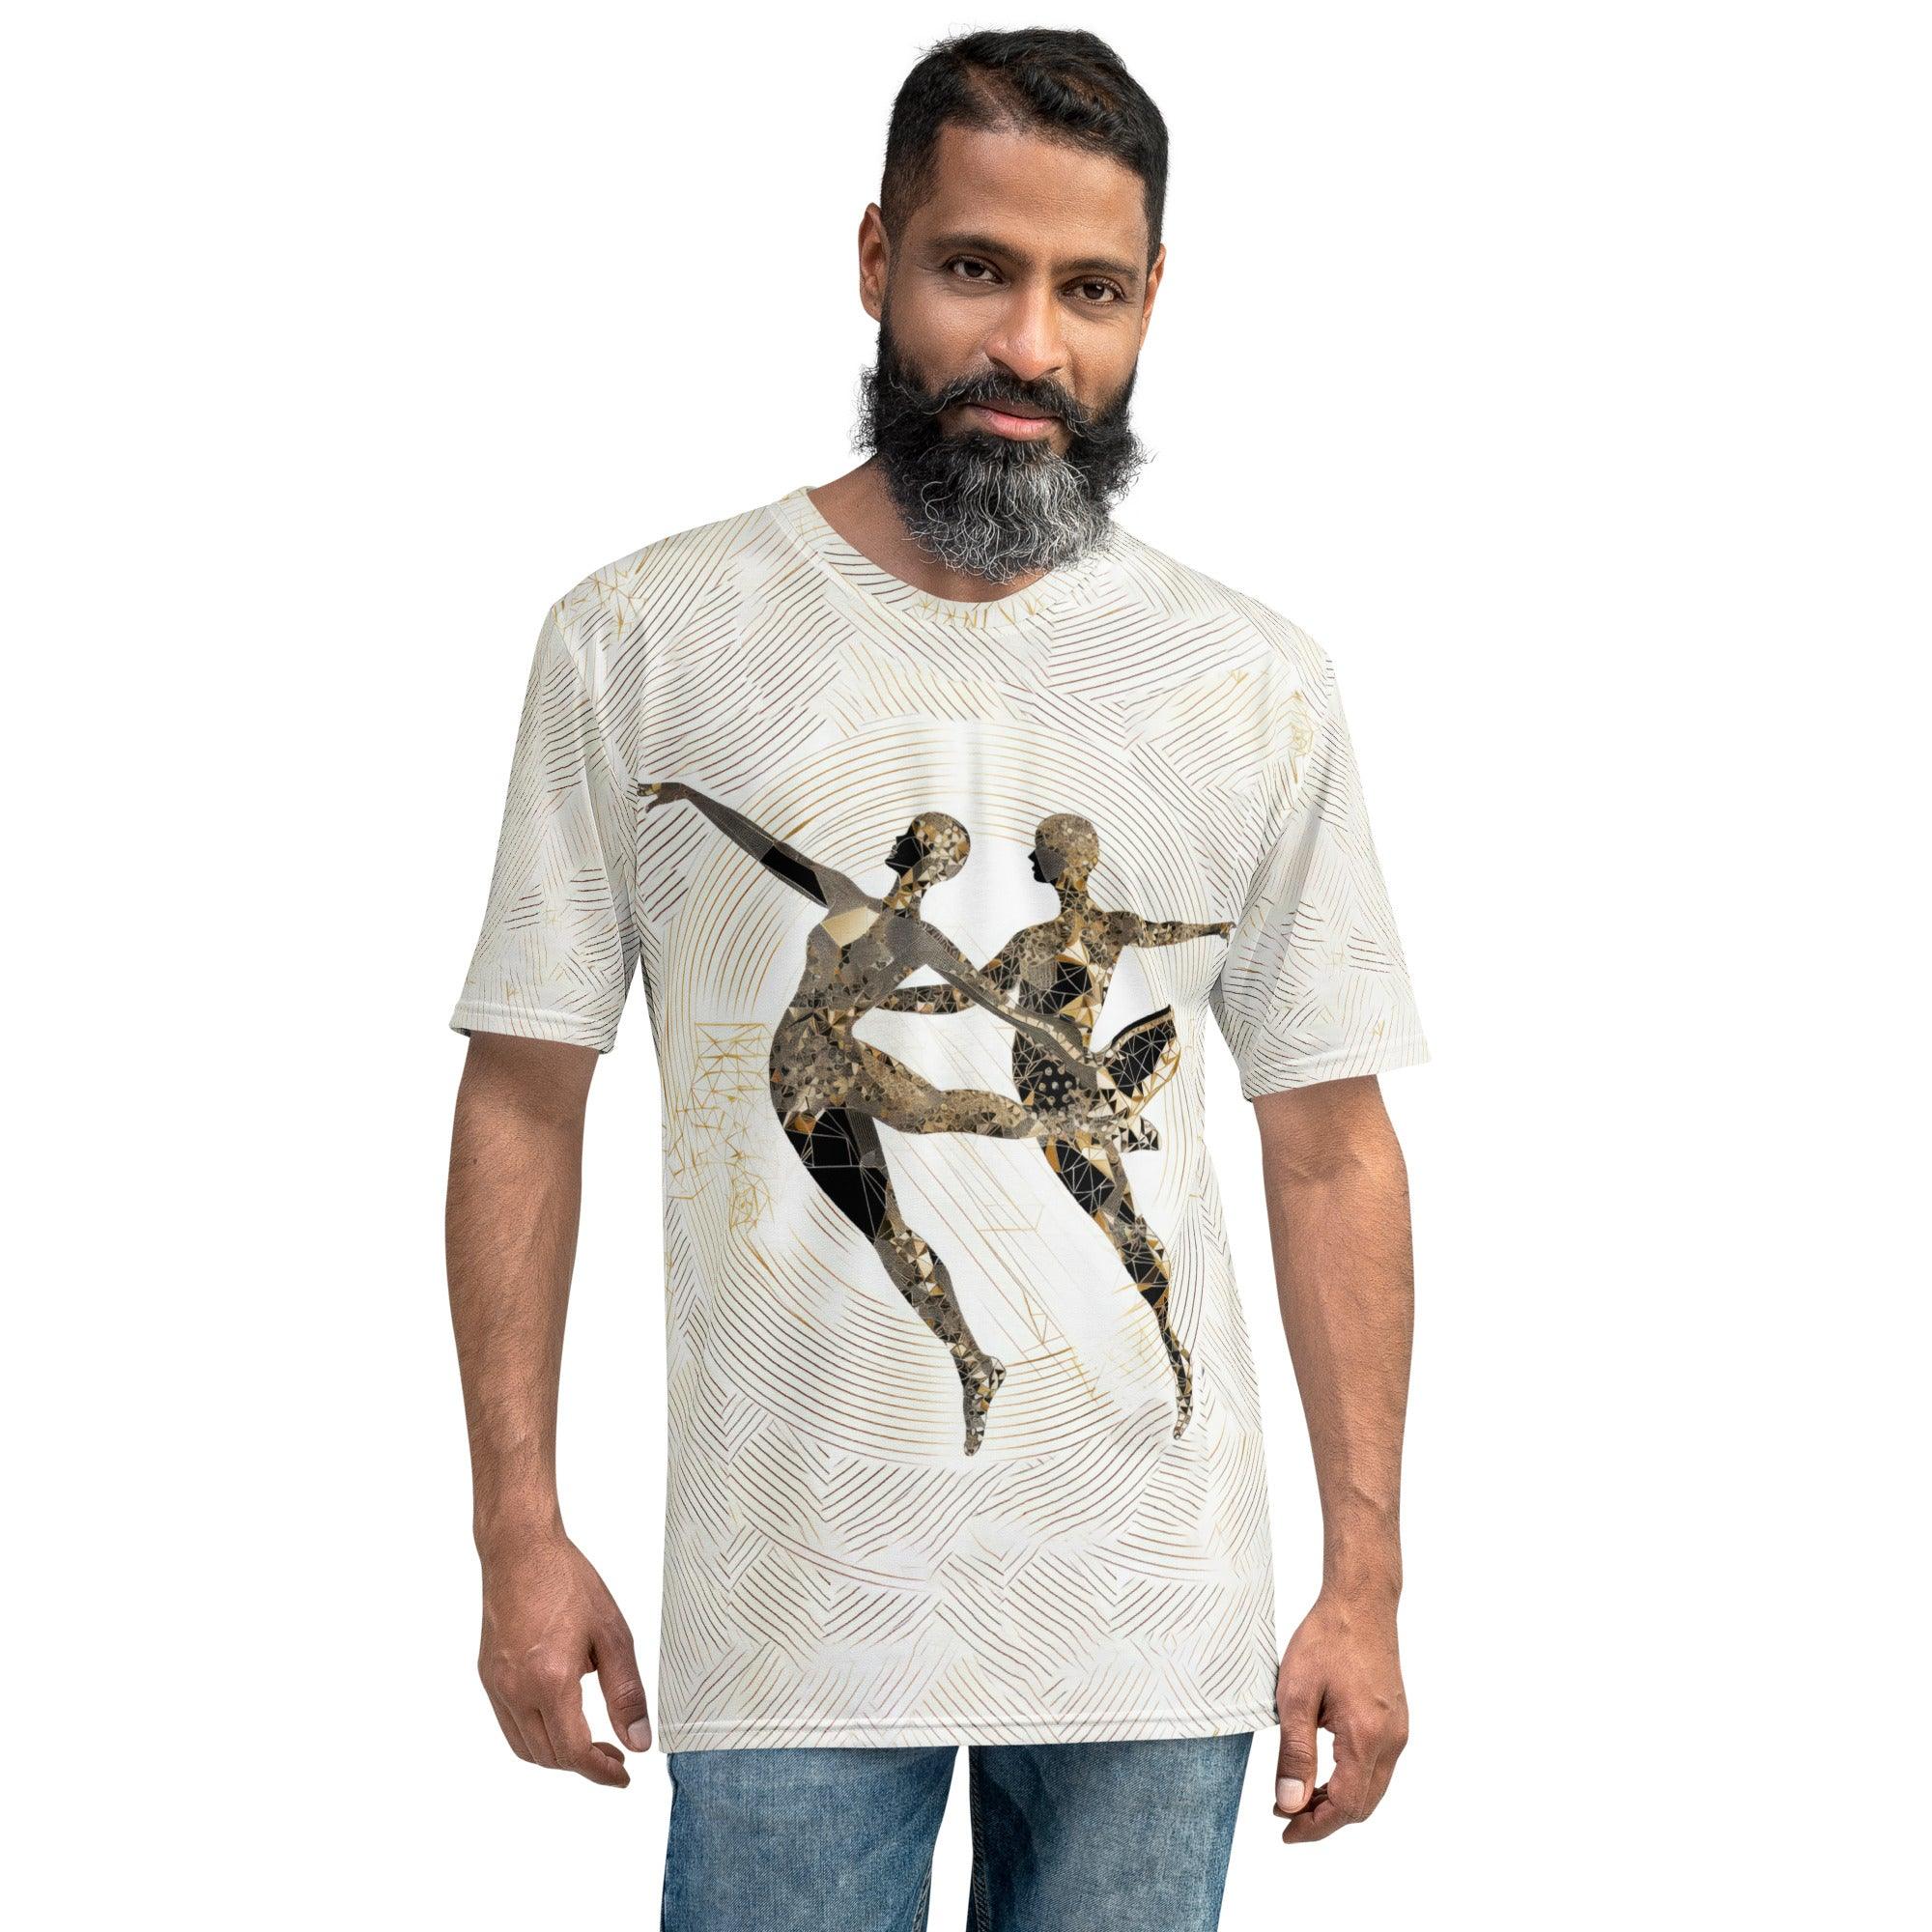 Lyrical Women's Dance Fashion Men's T-shirt - Beyond T-shirts